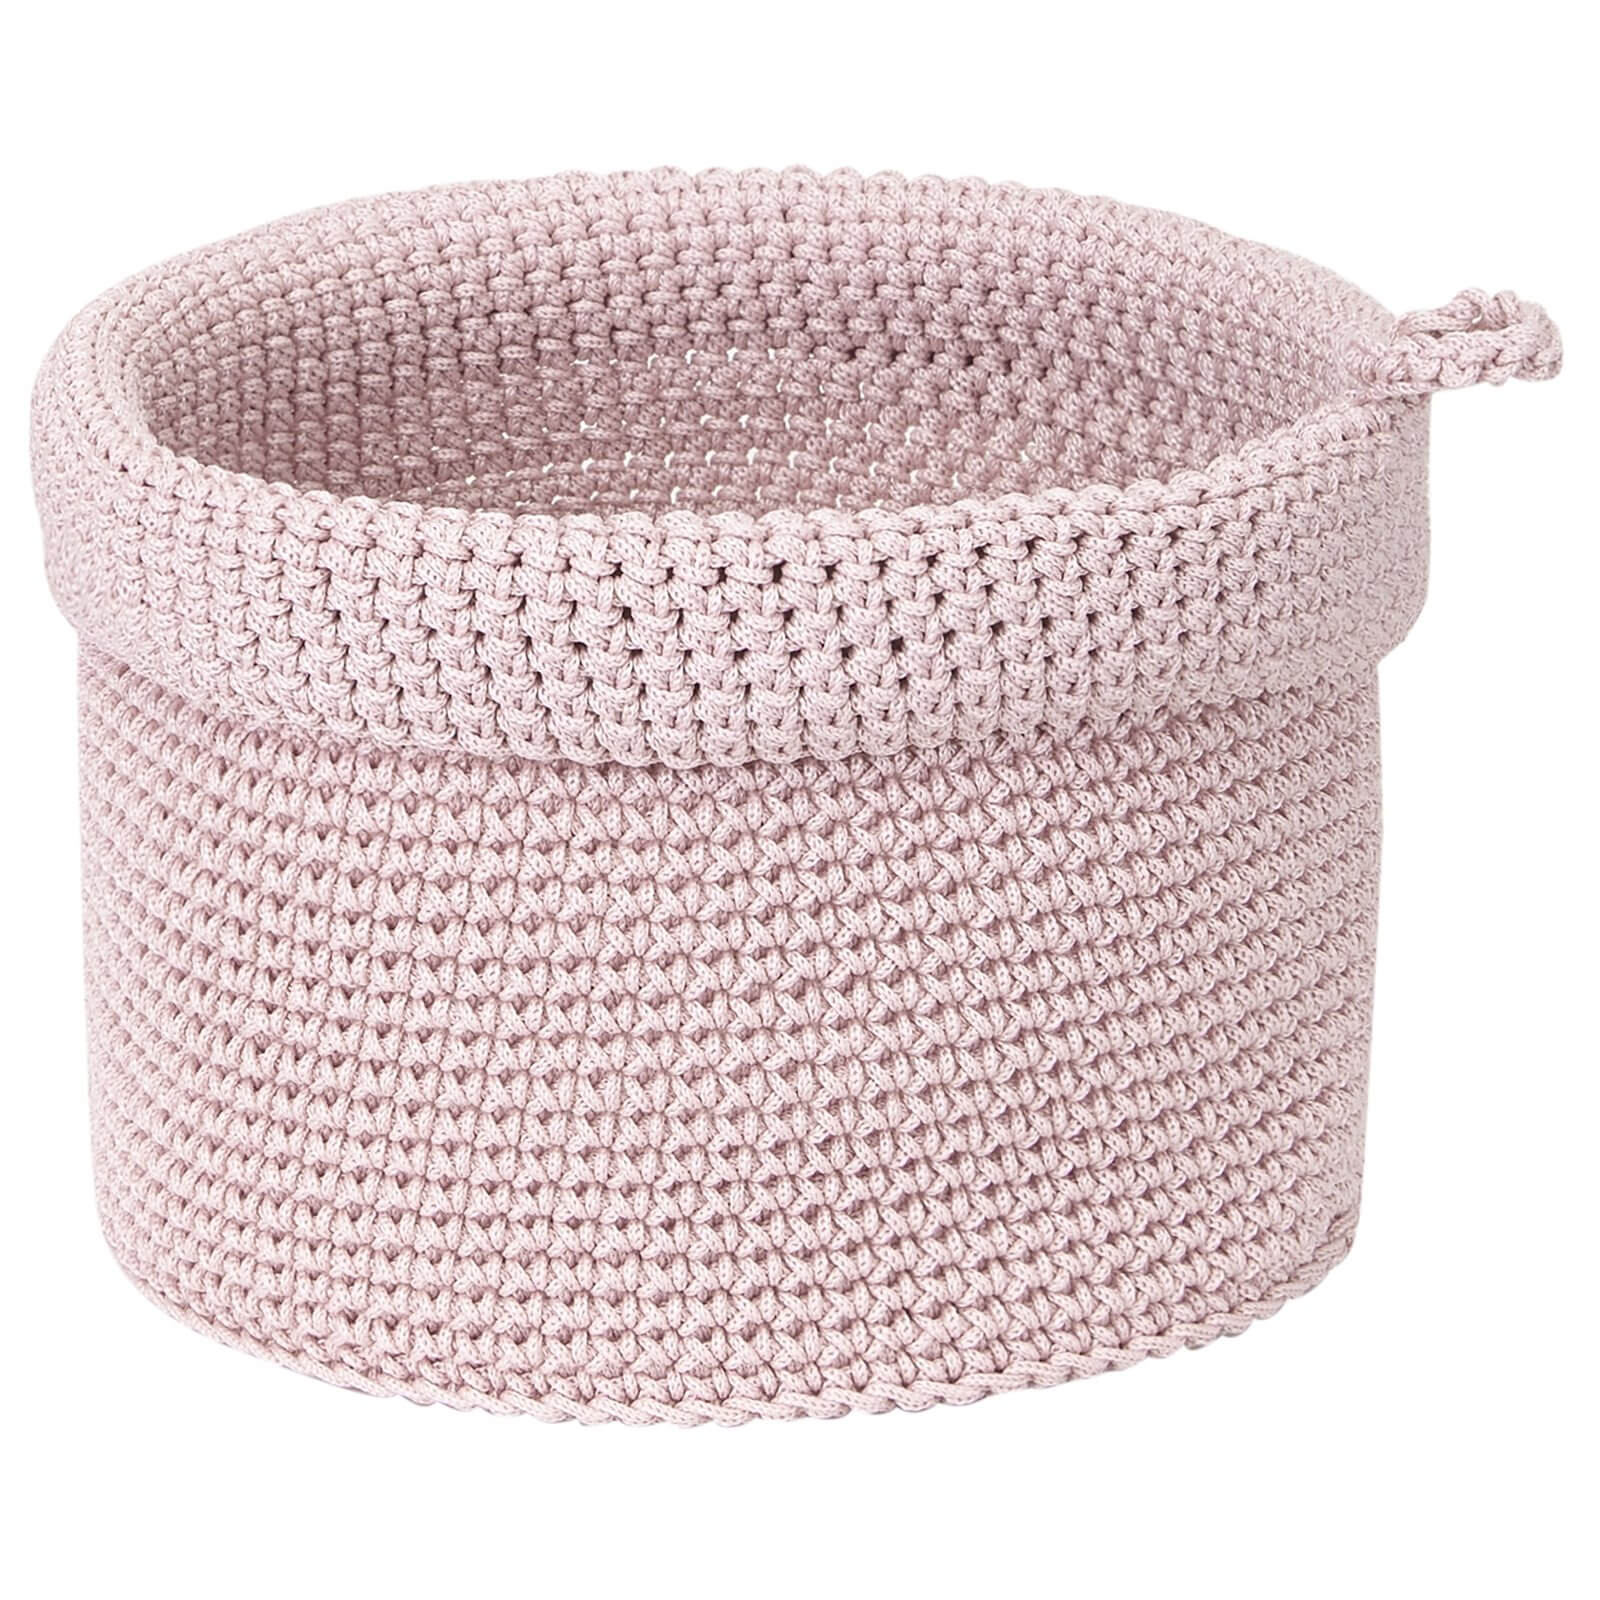 Knitted Storage Basket - Blush